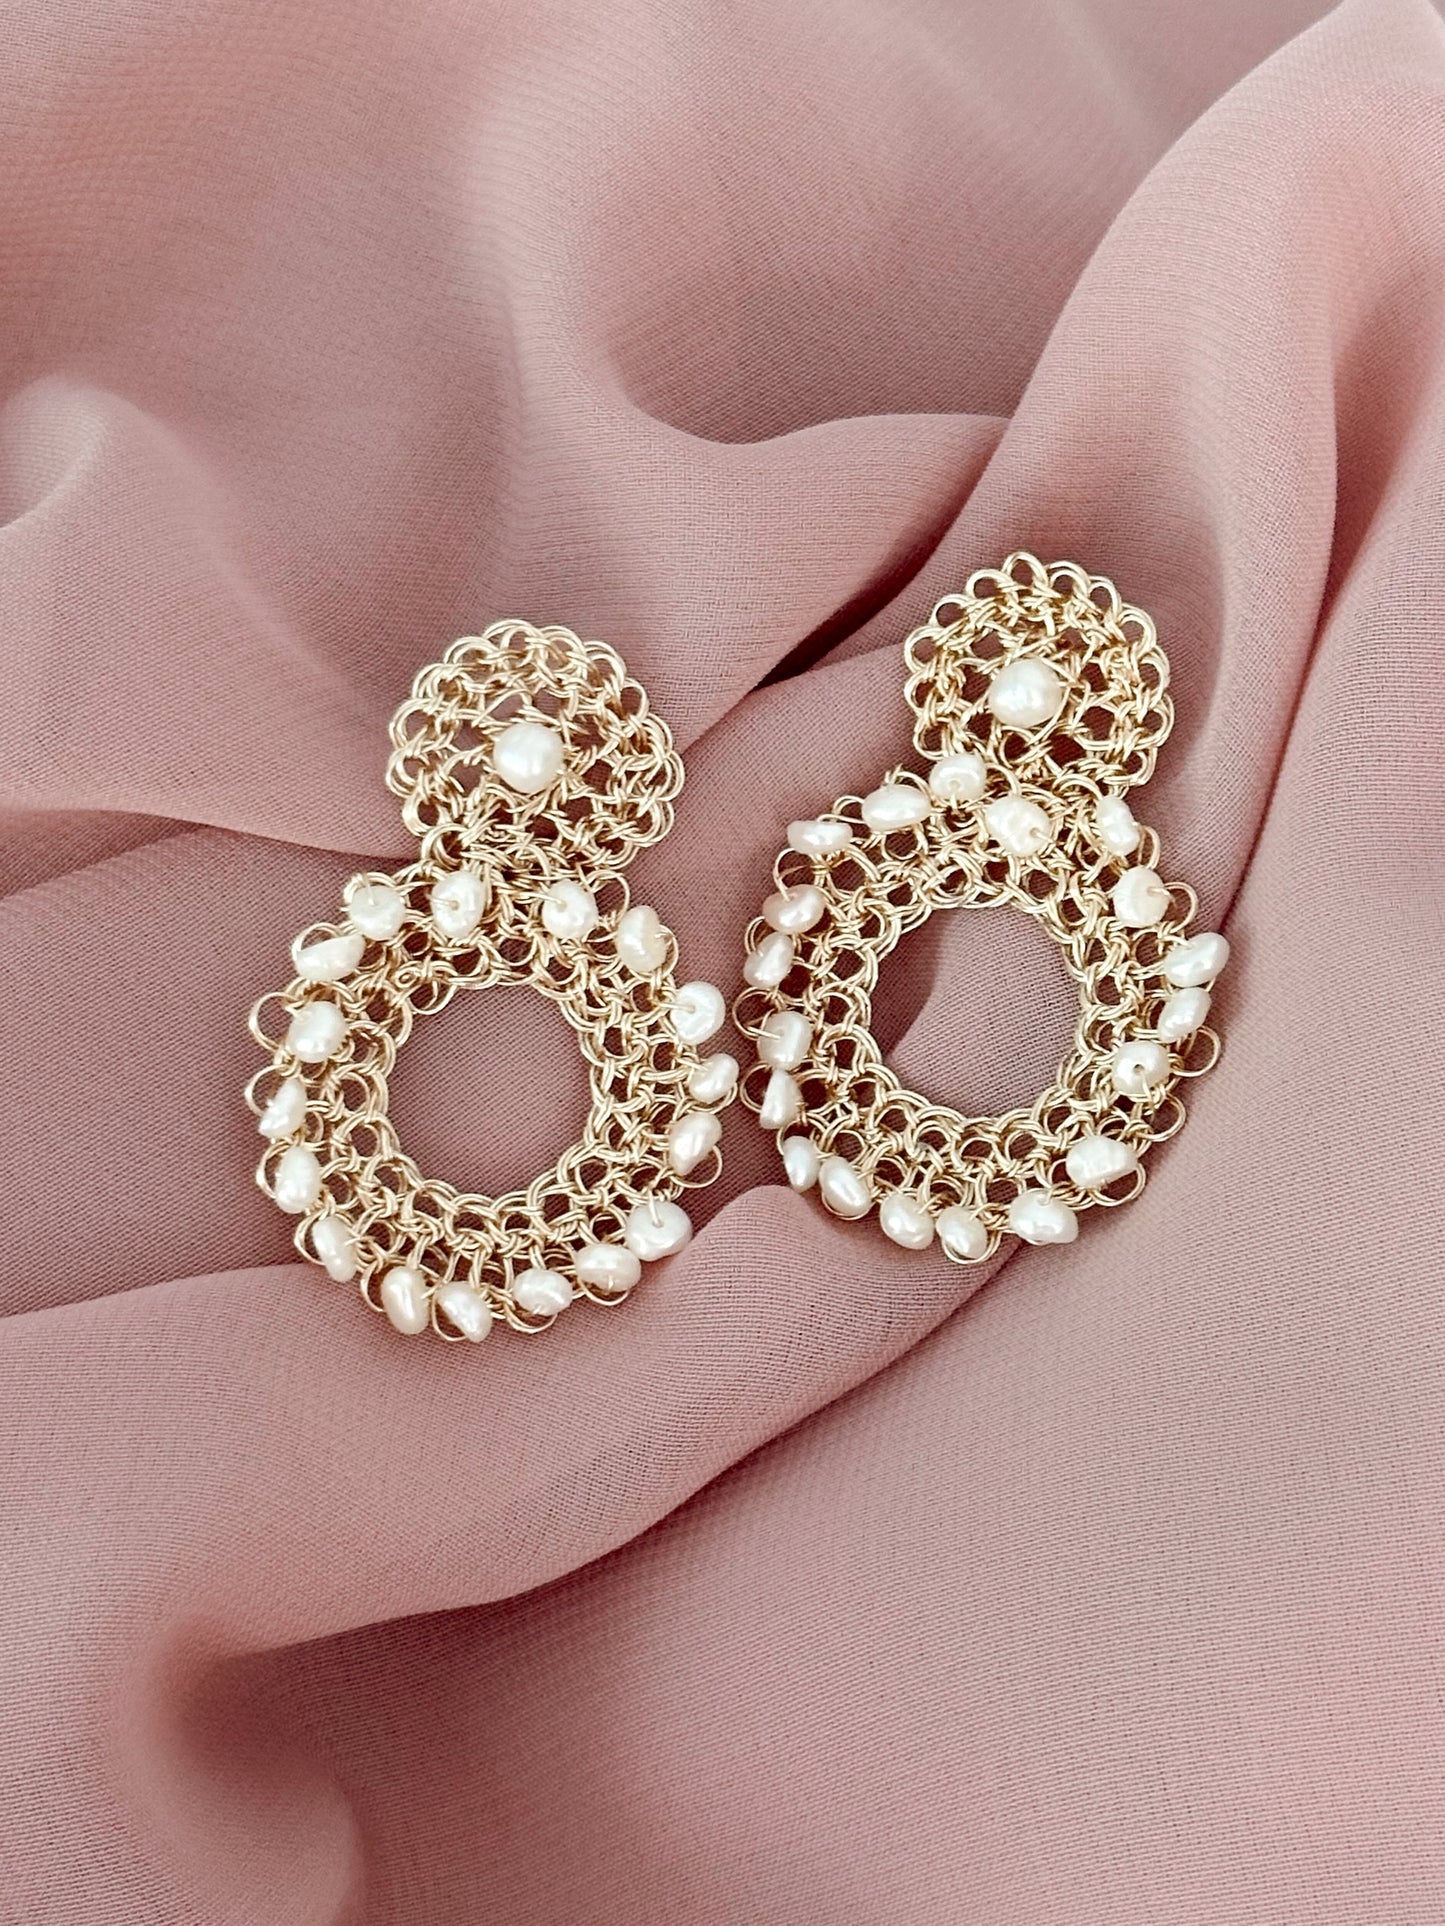 Ashley earrings